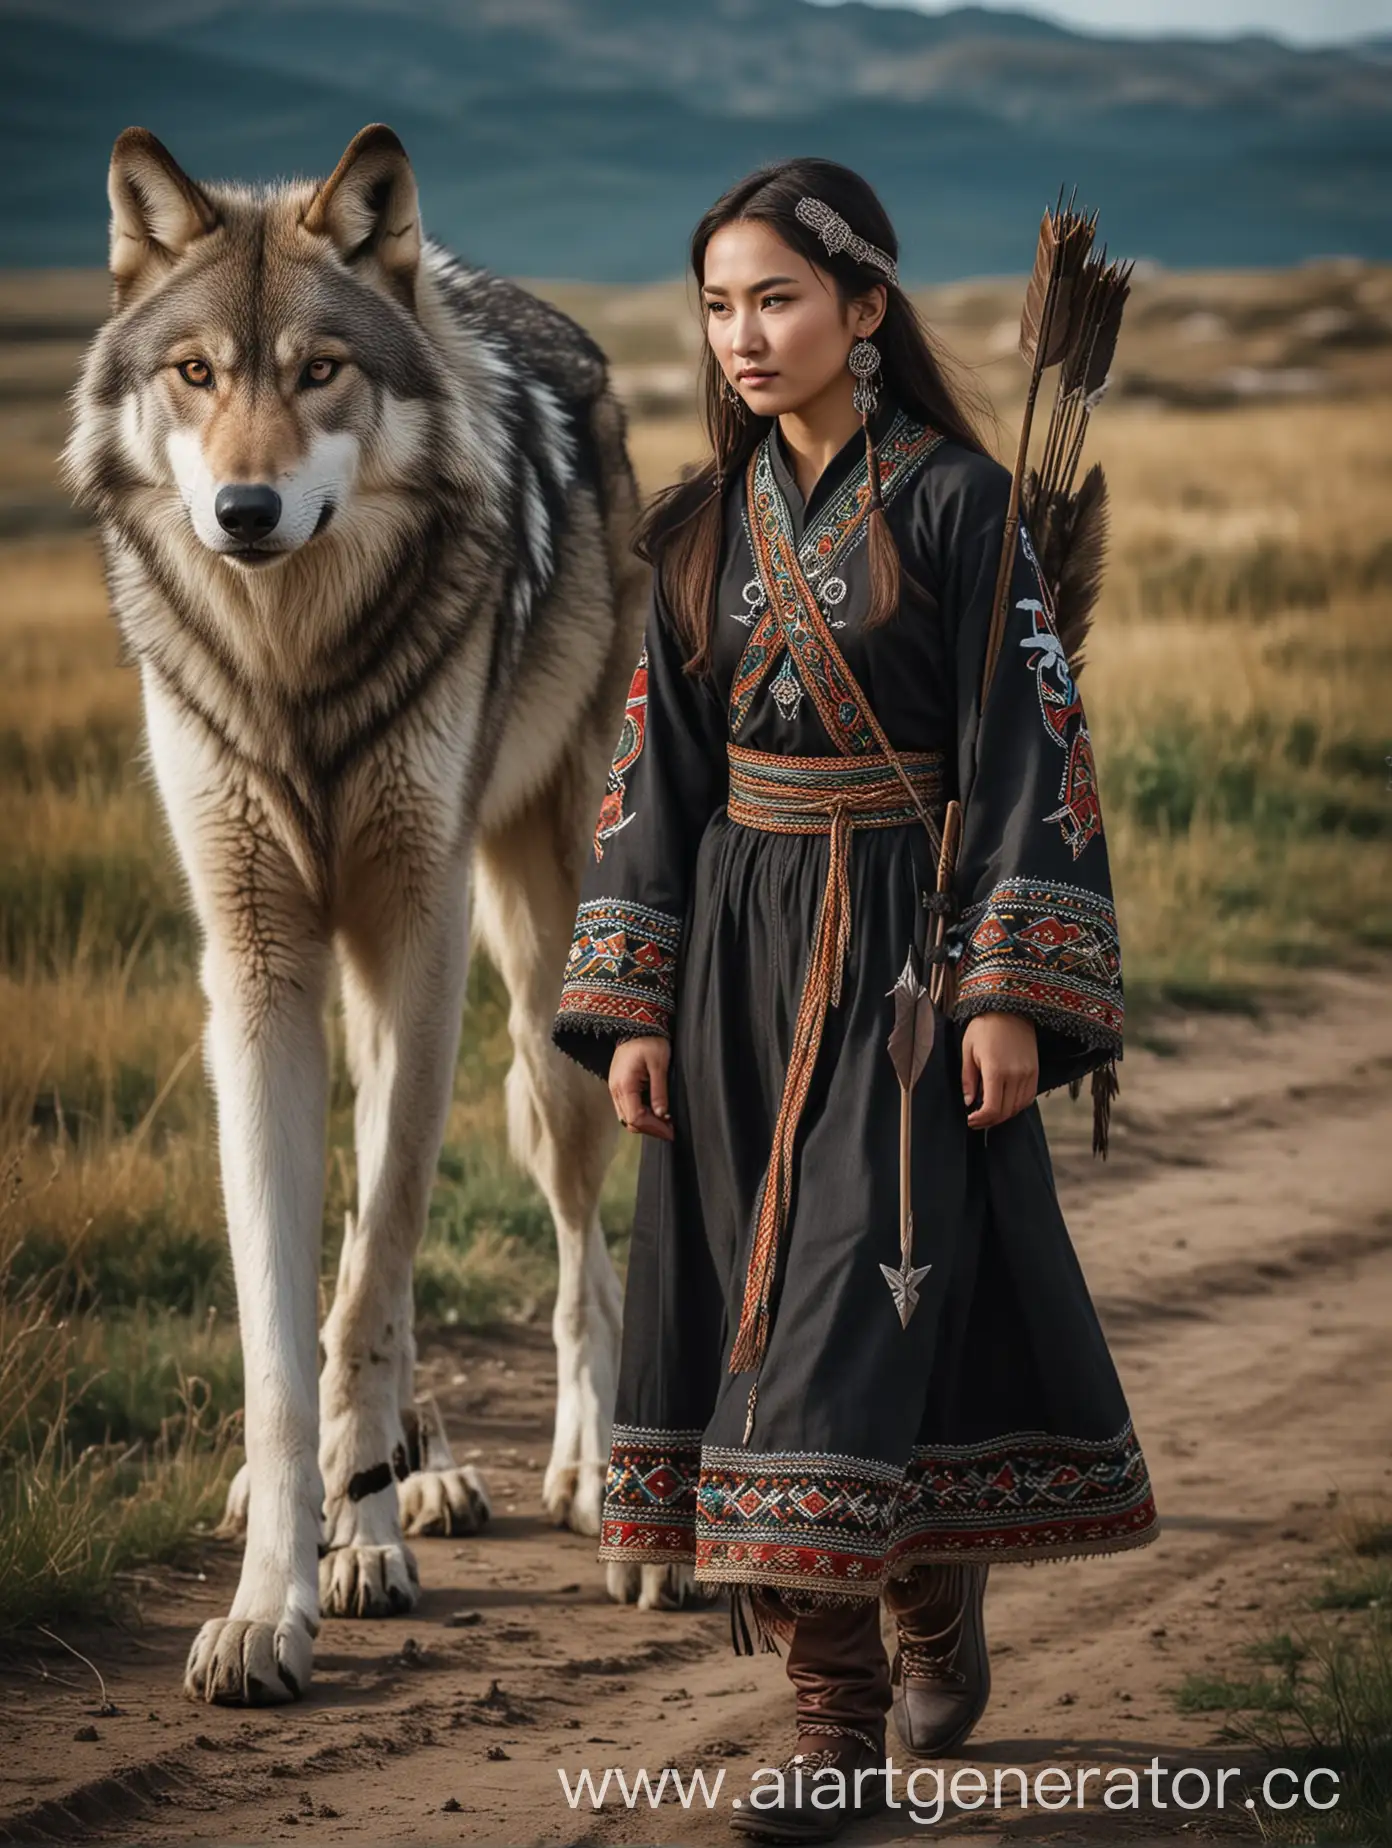 Kazakh woman wears a traditional dress. She has arrow, dark theme. A wolf following near the girl.